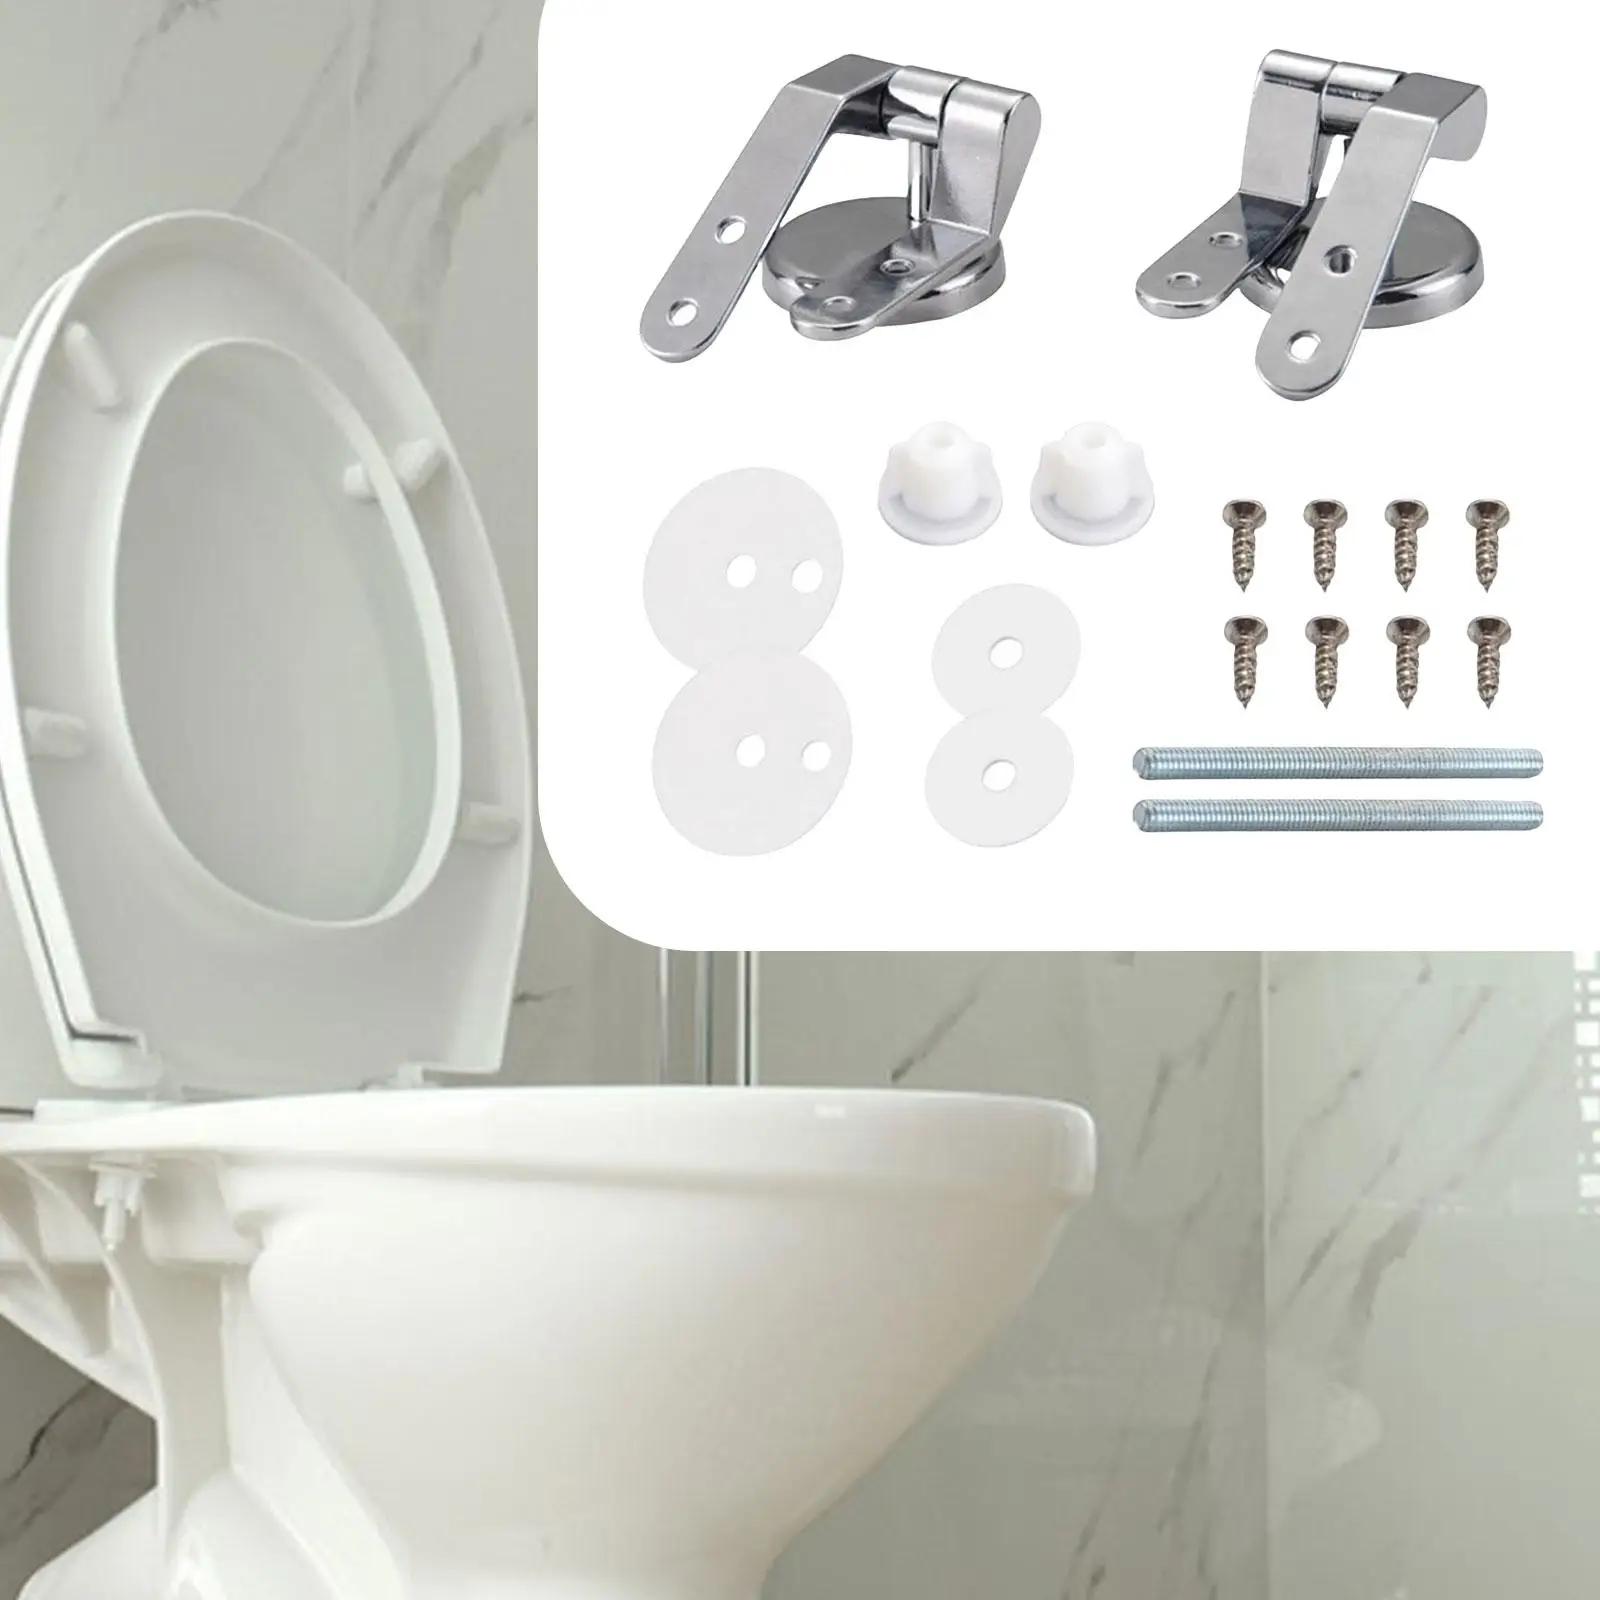 Toilet Lid Hinges Fixtures Set Zinc Alloy for Bathrooms Easily Install